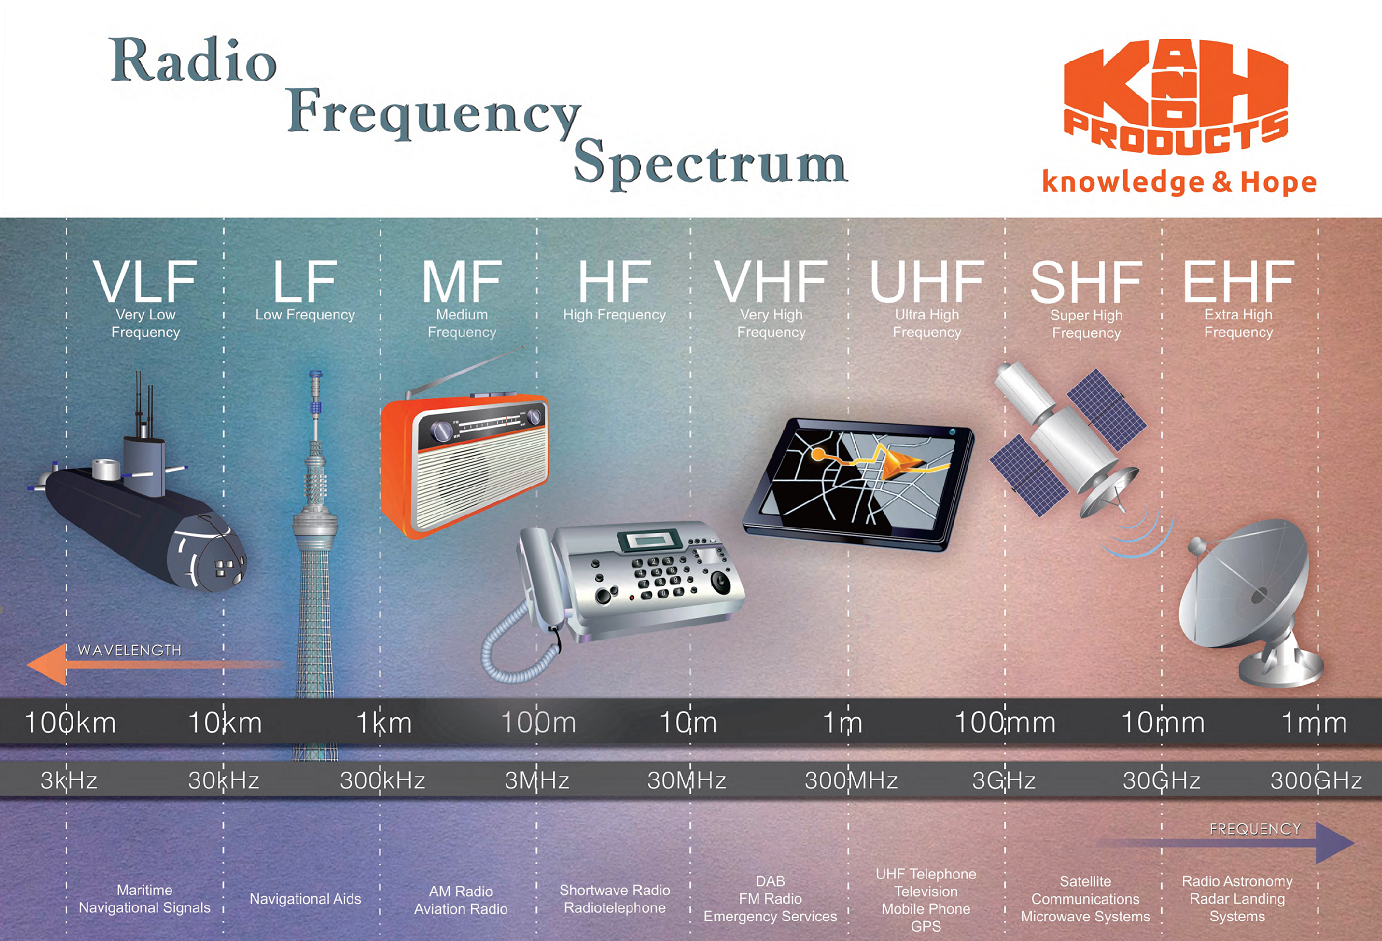 Radio Frequency Spectrum Diagram (image)